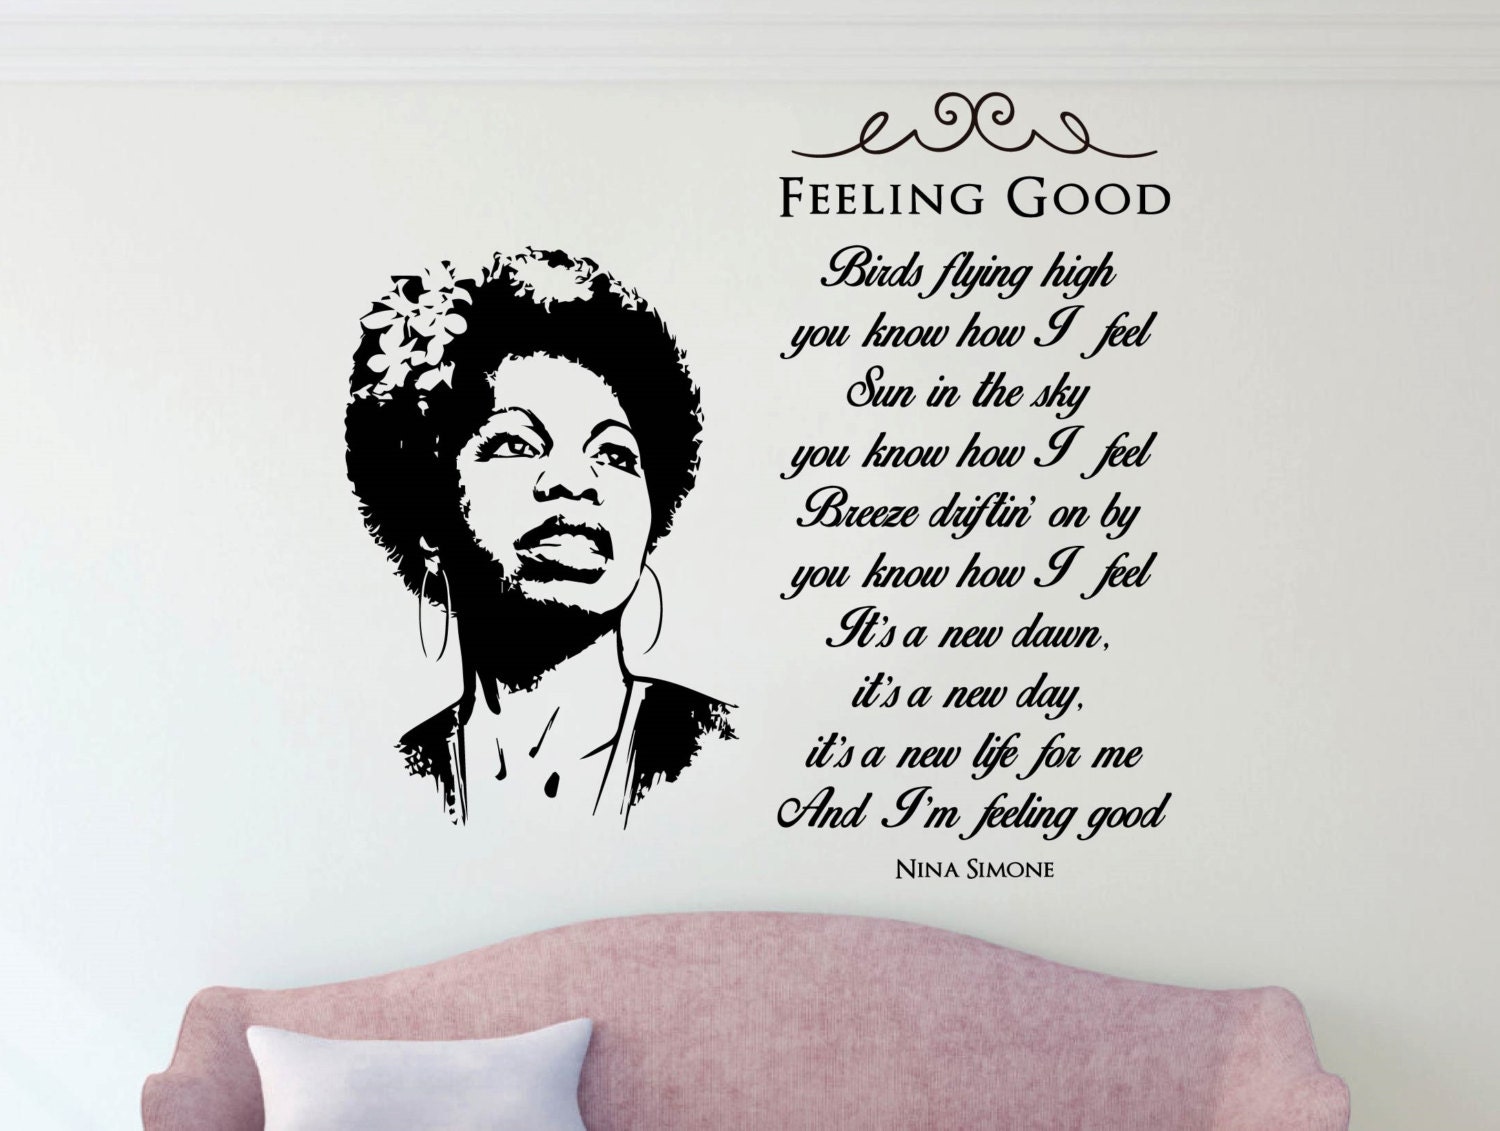 Feel good перевод. Филинг Гуд. Feeling good (песня). Nina Simone feeling good. Nina Simone feeling good текст.